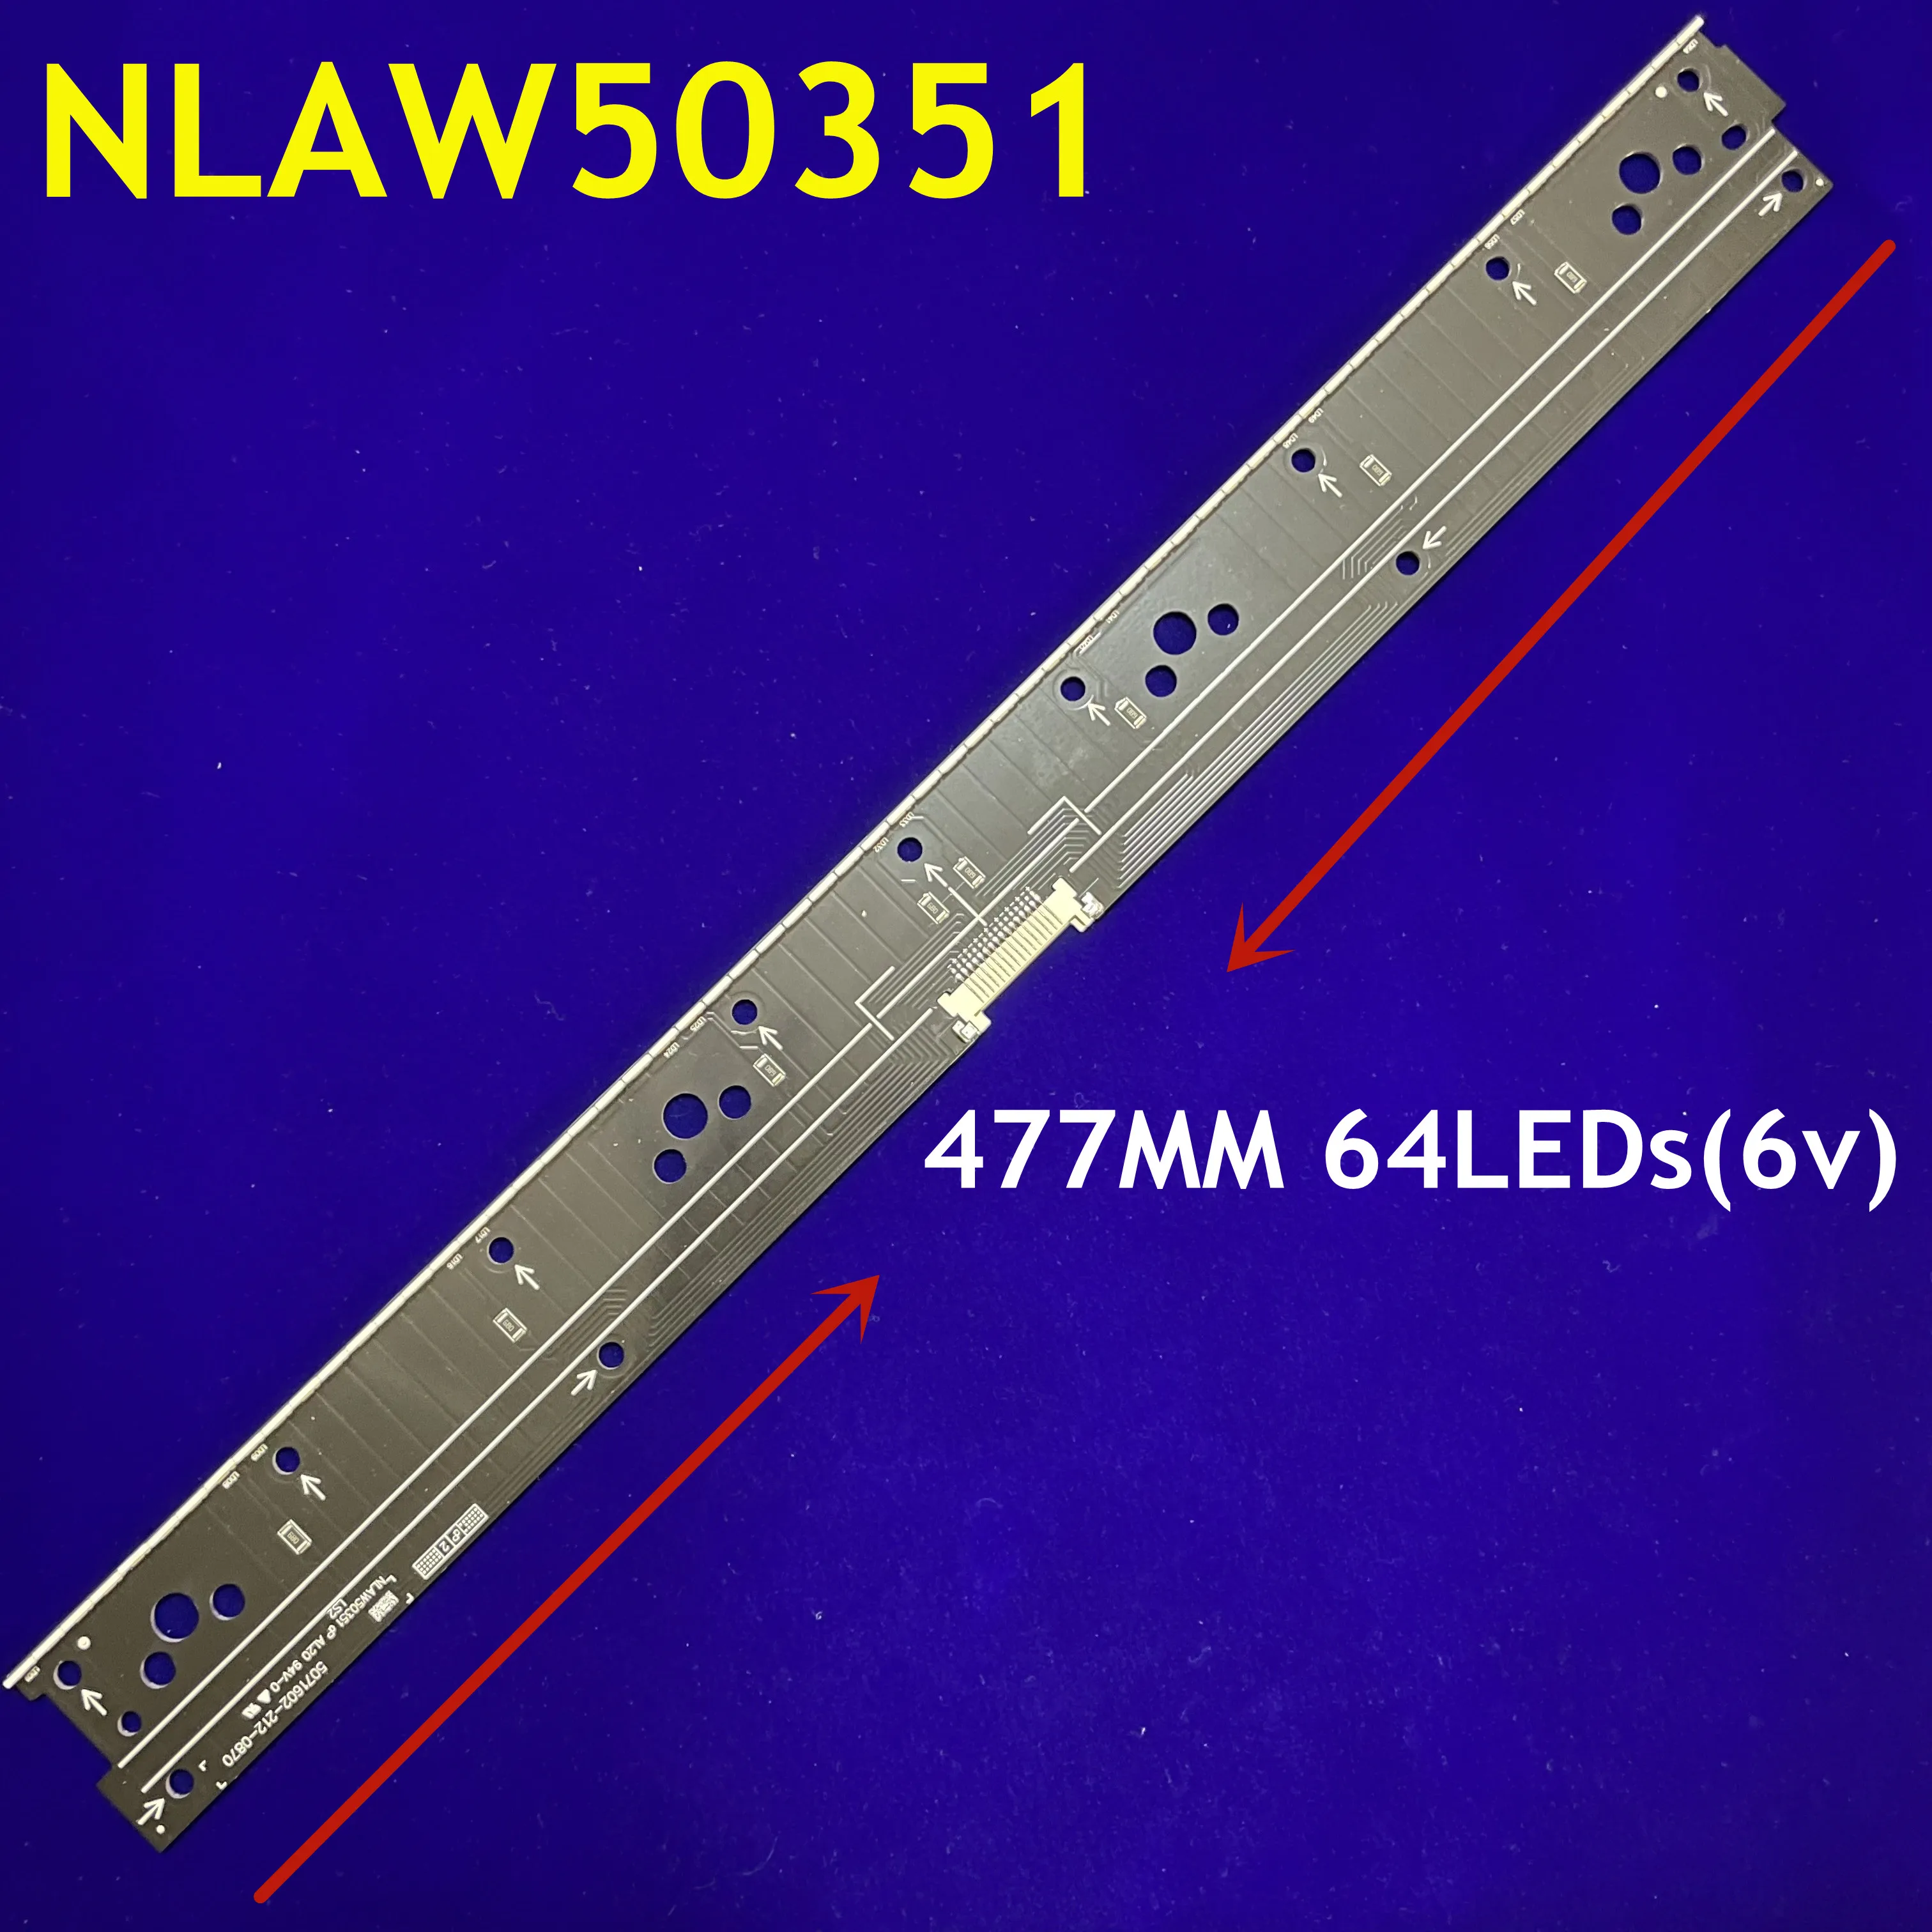 tira-de-luces-led-accesorio-para-sony-kd-65x9000c-piezas-kd-65x9005c-kd-65x9000c-kd-65x9005c-nlaw50351-yd5s650htg01-ls1-3-xbr-65x900c-novedad